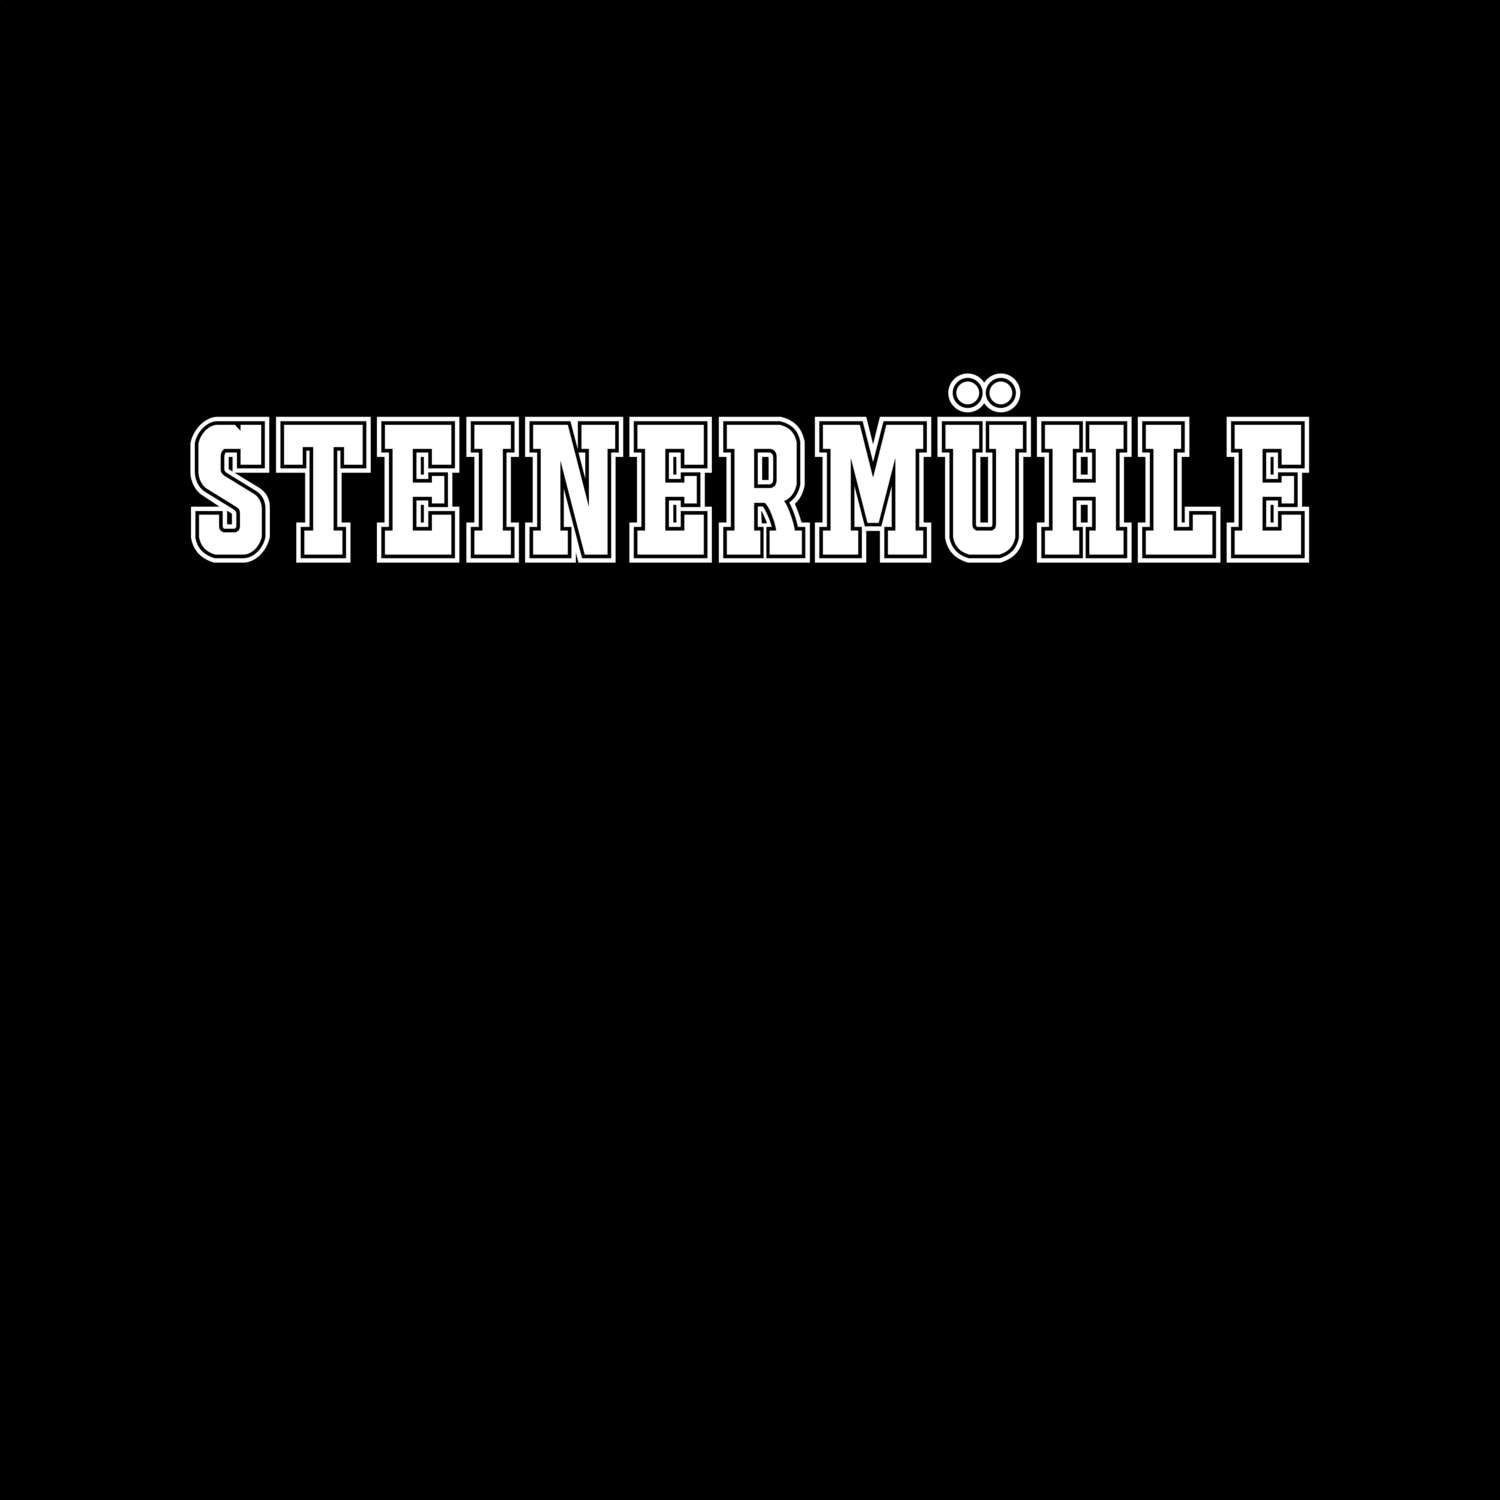 Steinermühle T-Shirt »Classic«